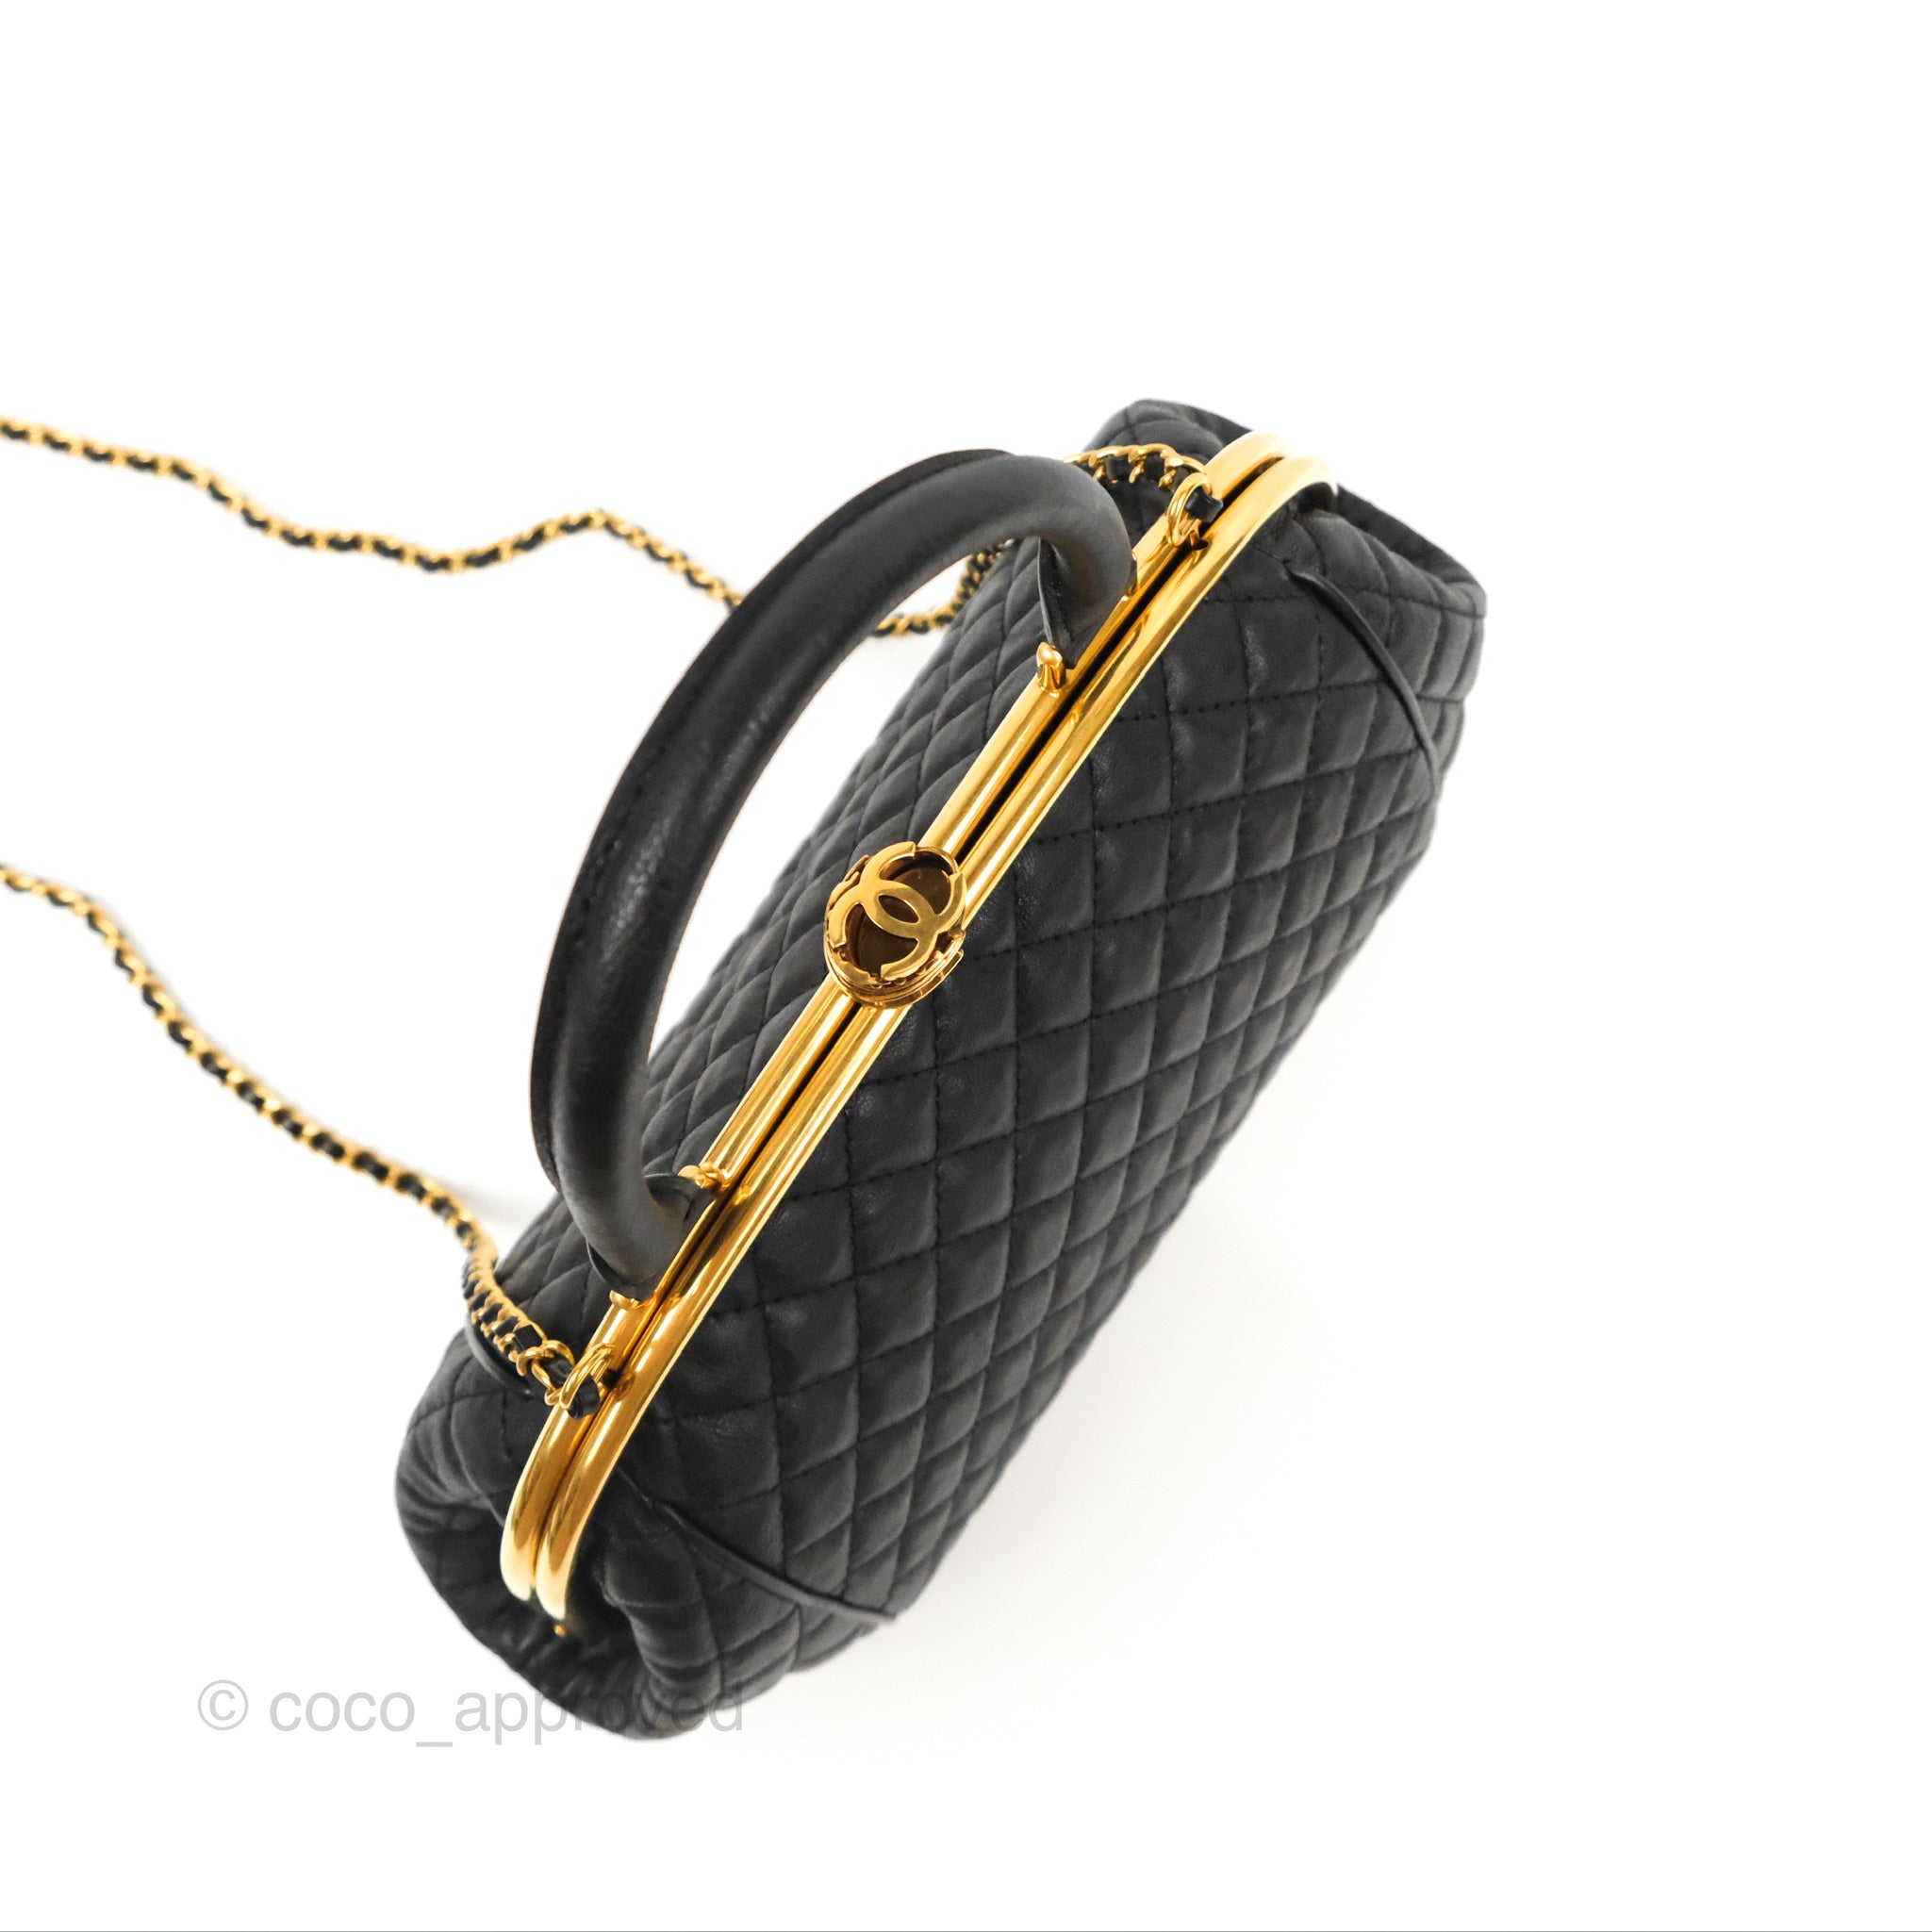 Sold at Auction: Chanel Black Patent Leather Kiss Lock Shoulder Bag